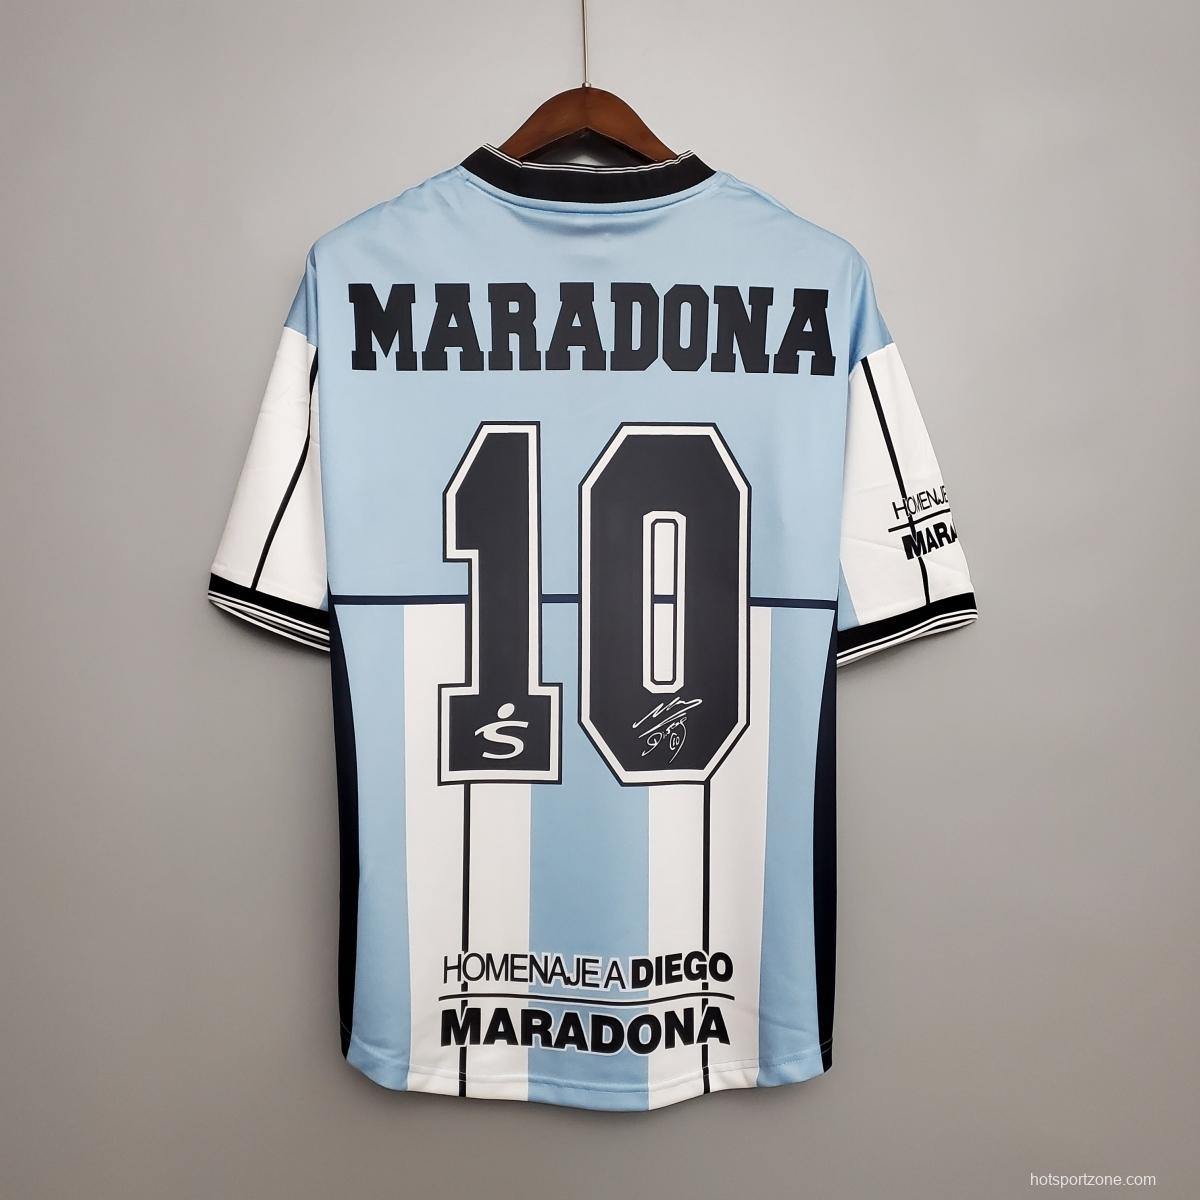 Retro 2001 Argentina Maradona #10 Commemorative Edition Soccer Jersey